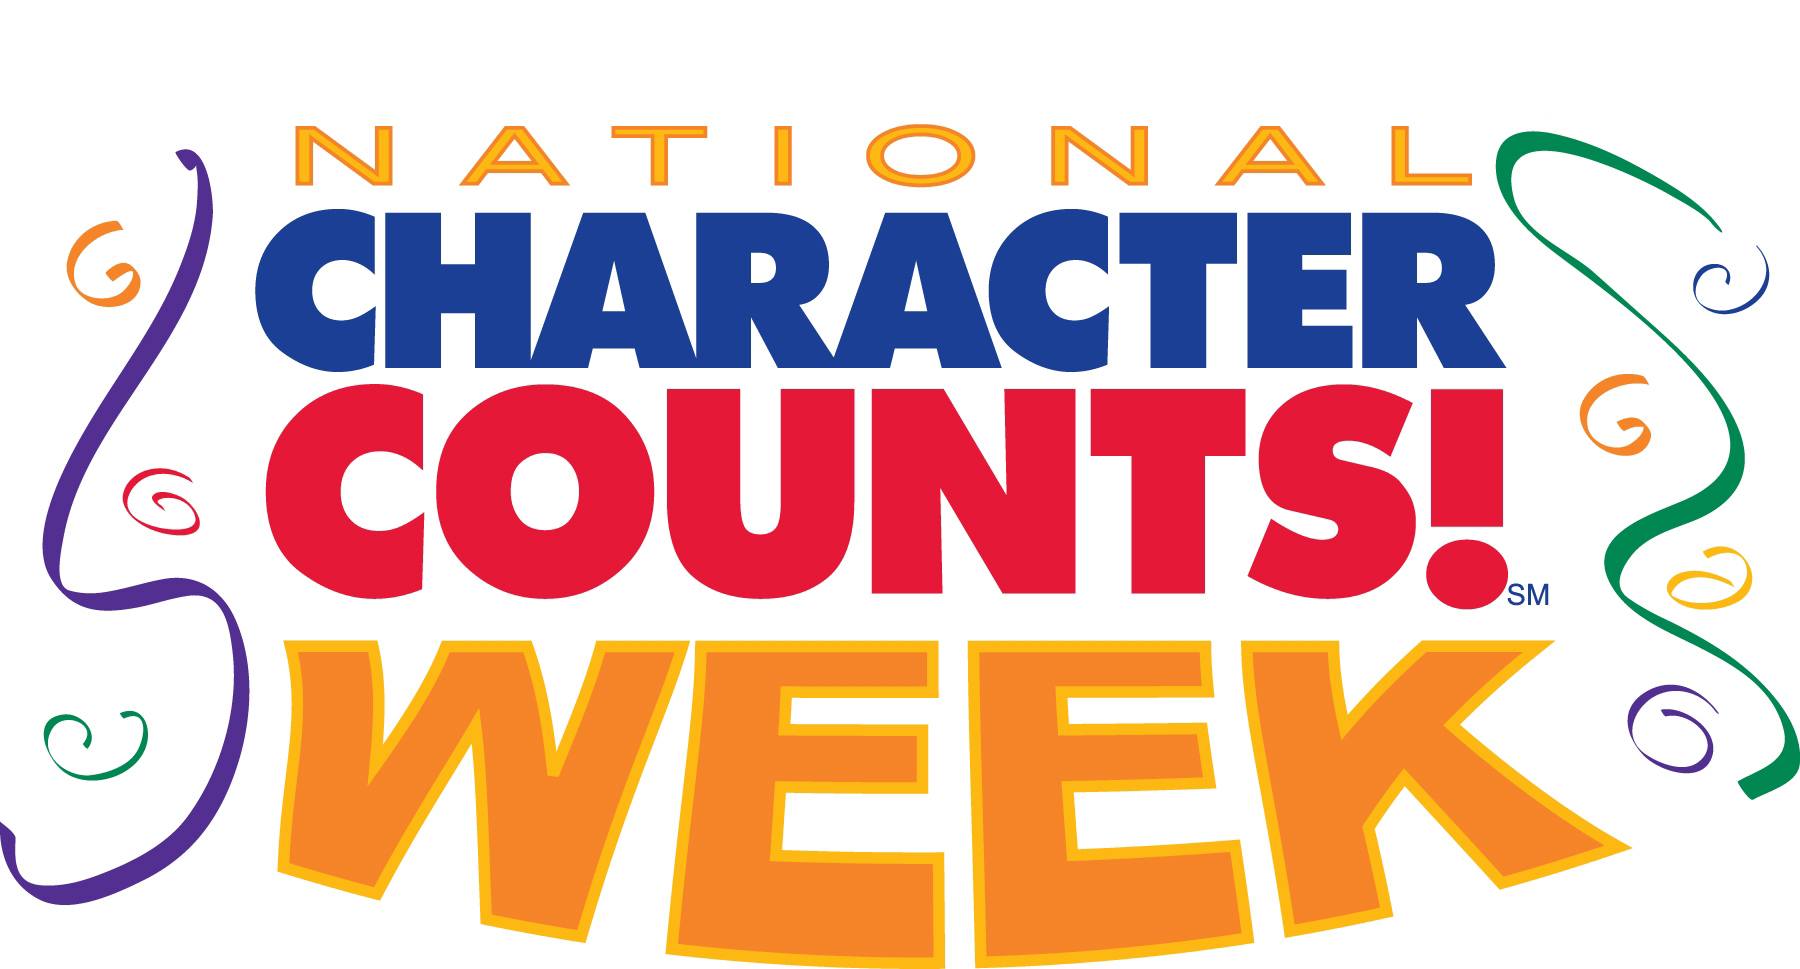 National Character Counts! Week logo